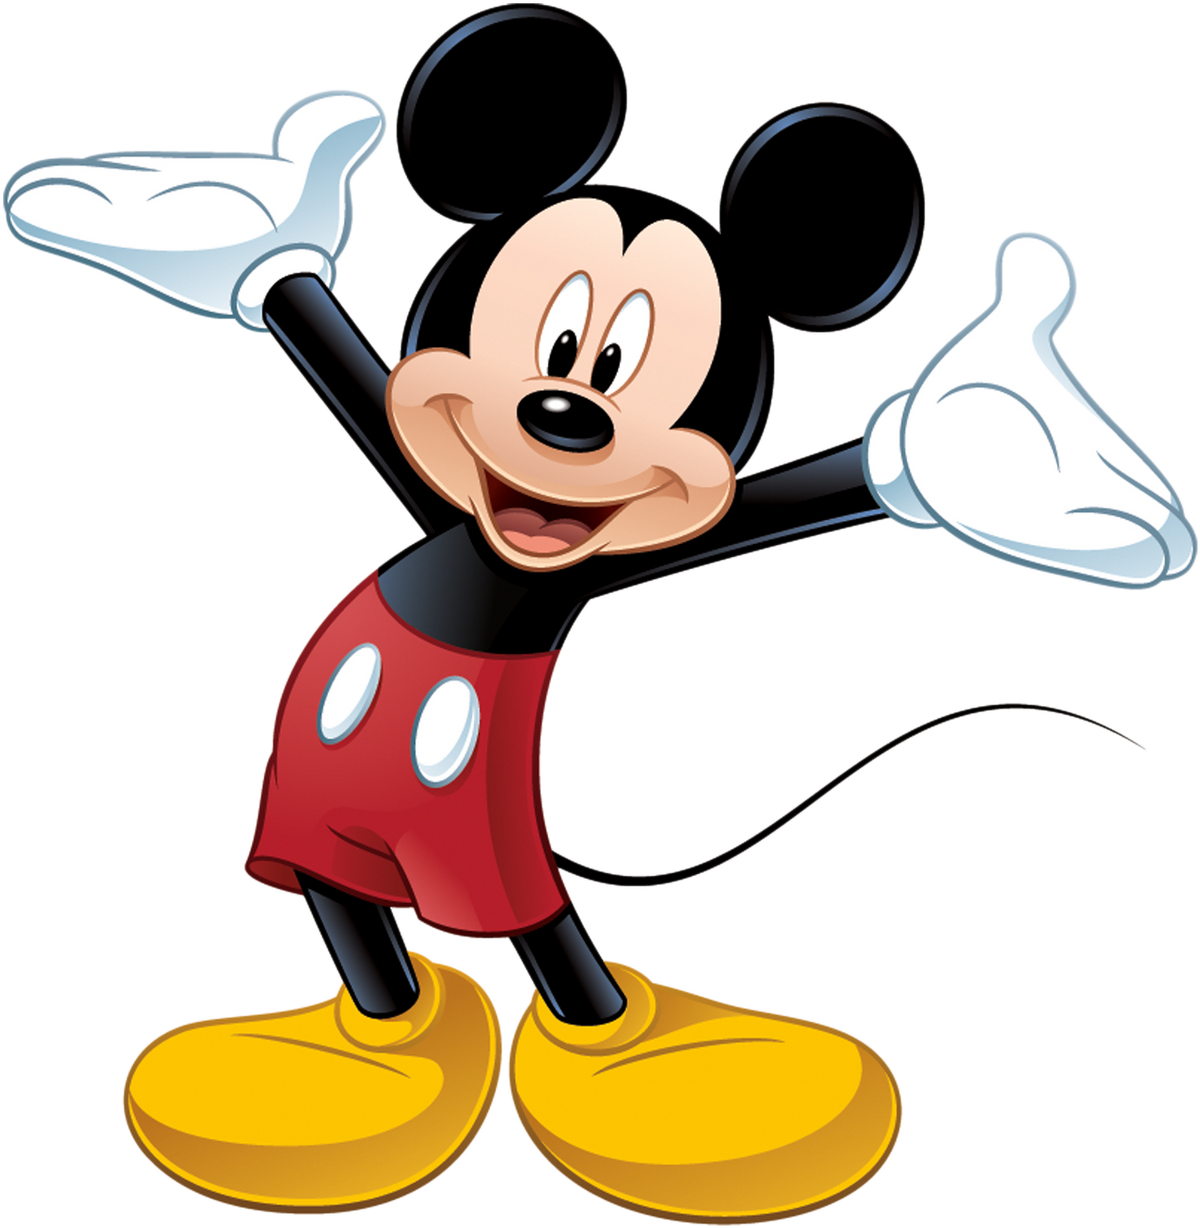 Disney's Junior Spin Art Create Art Spin Art Machine Colors Paint Glitter  Mickey